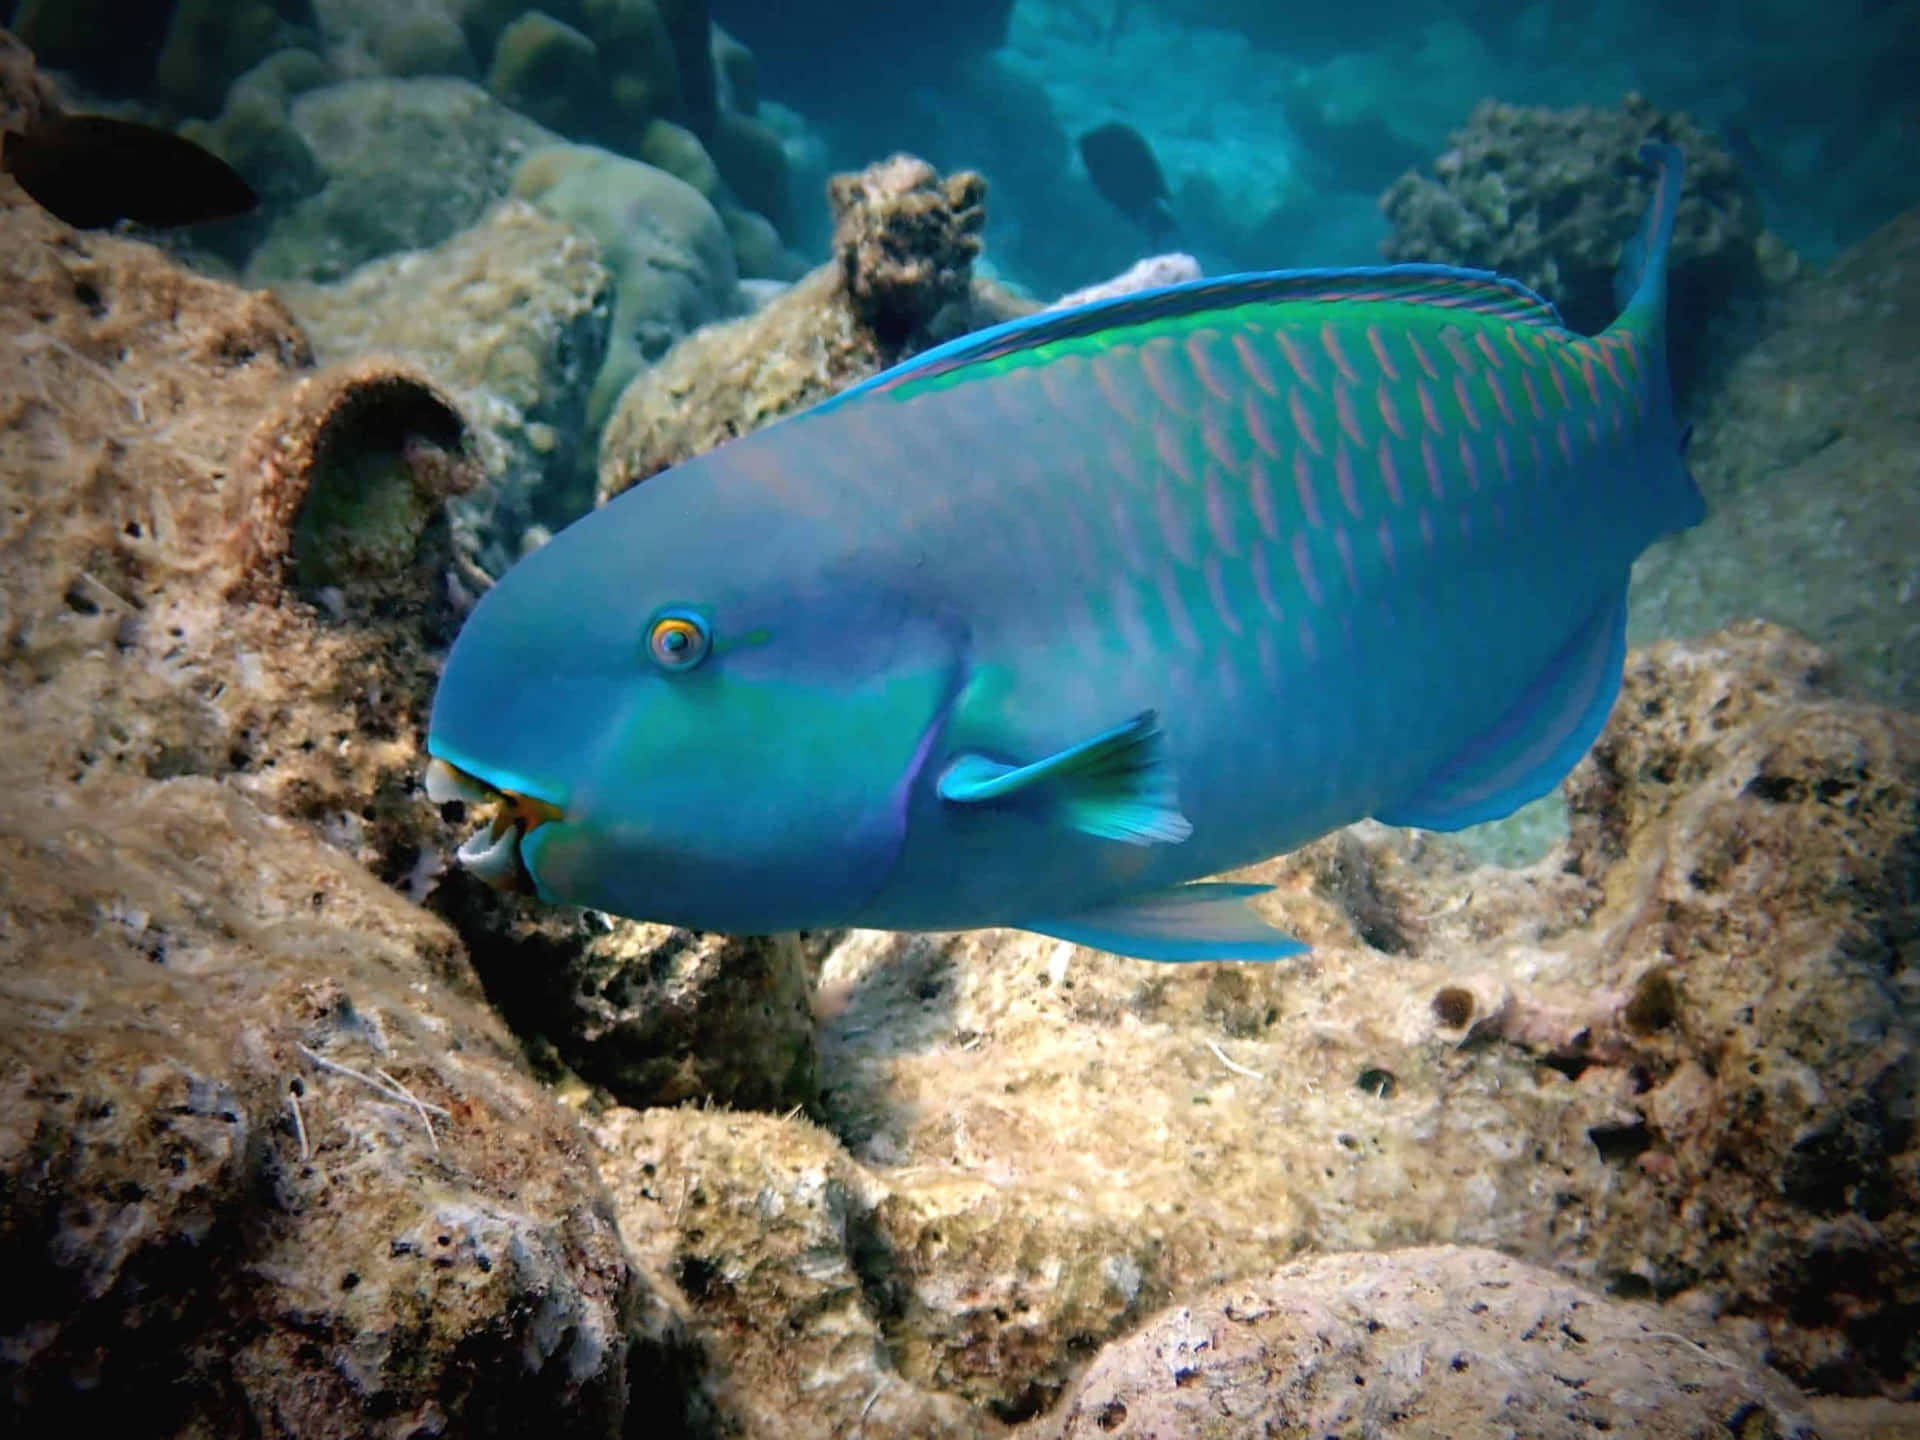 Vibrant Parrotfish Underwater Wallpaper